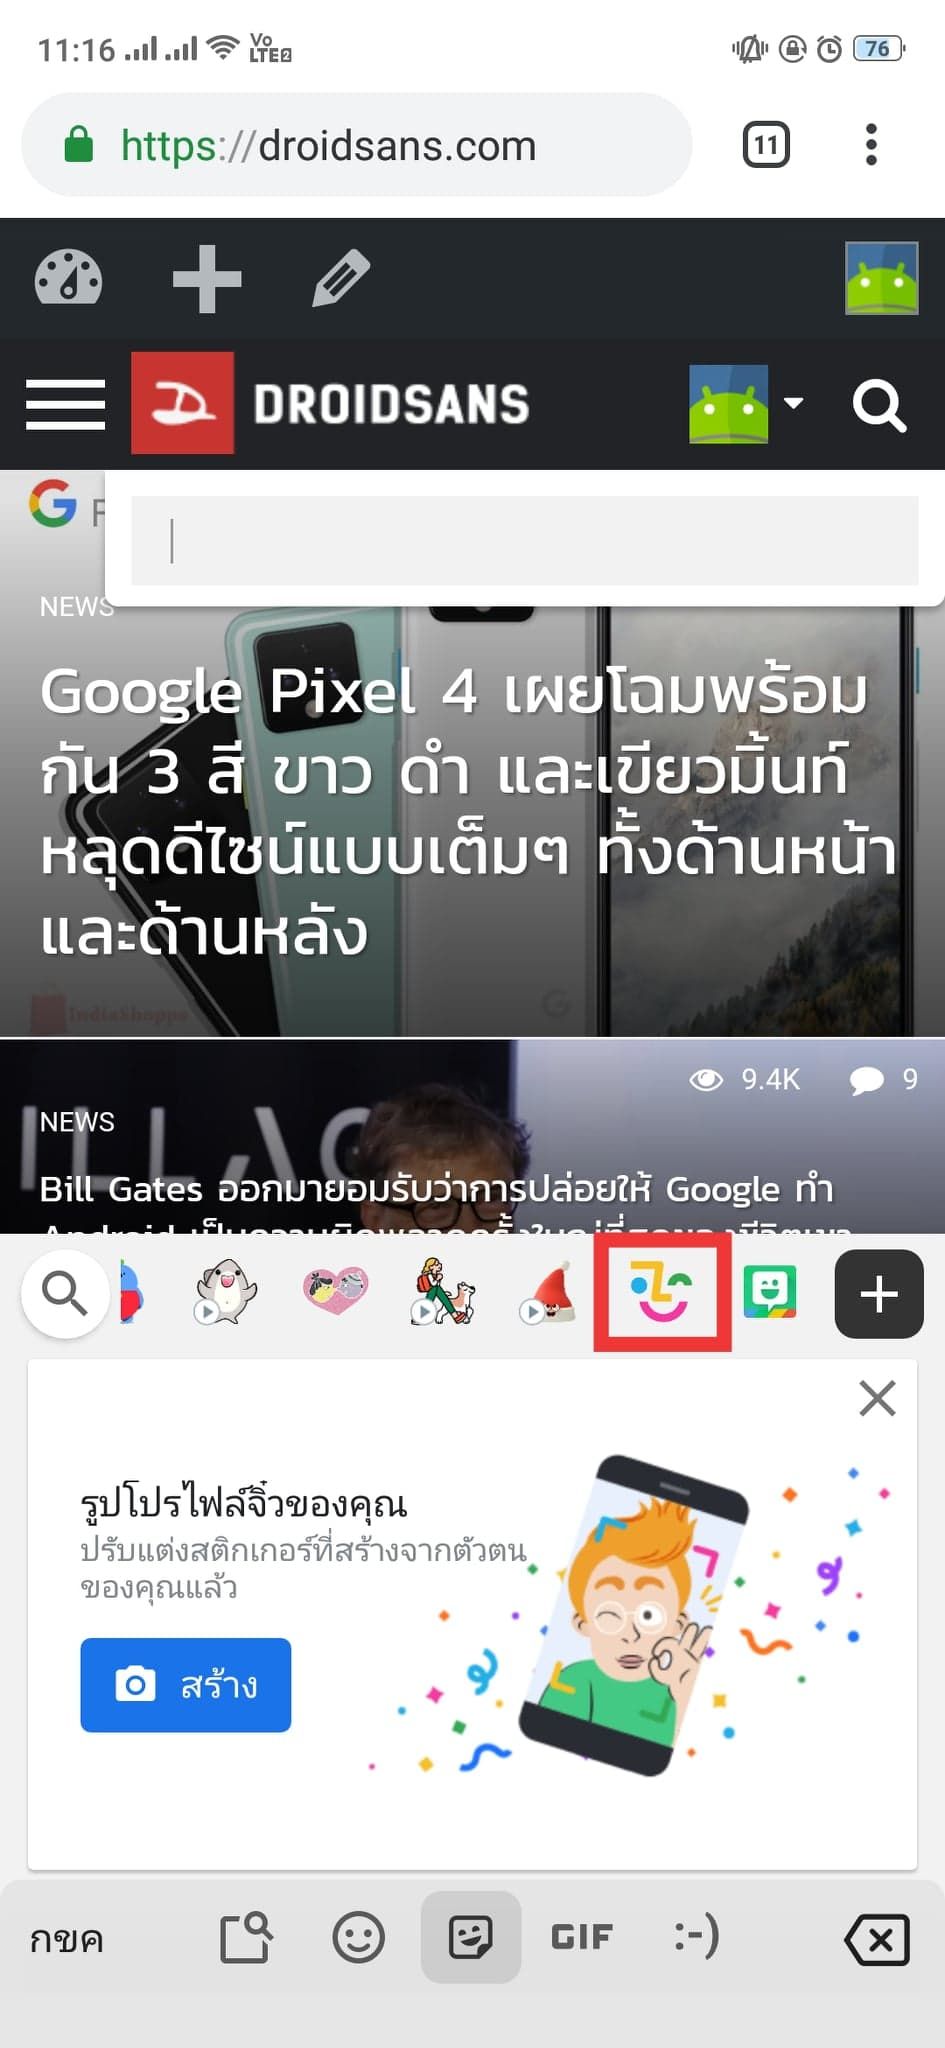 Google ปล่อยฟีเจอร์ใหม่ให้คีย์บอร์ด Gboard สร้างสติ๊กเกอร์หน้าตัวเองได้ฟรีๆ ทั้ง Android และ iOS